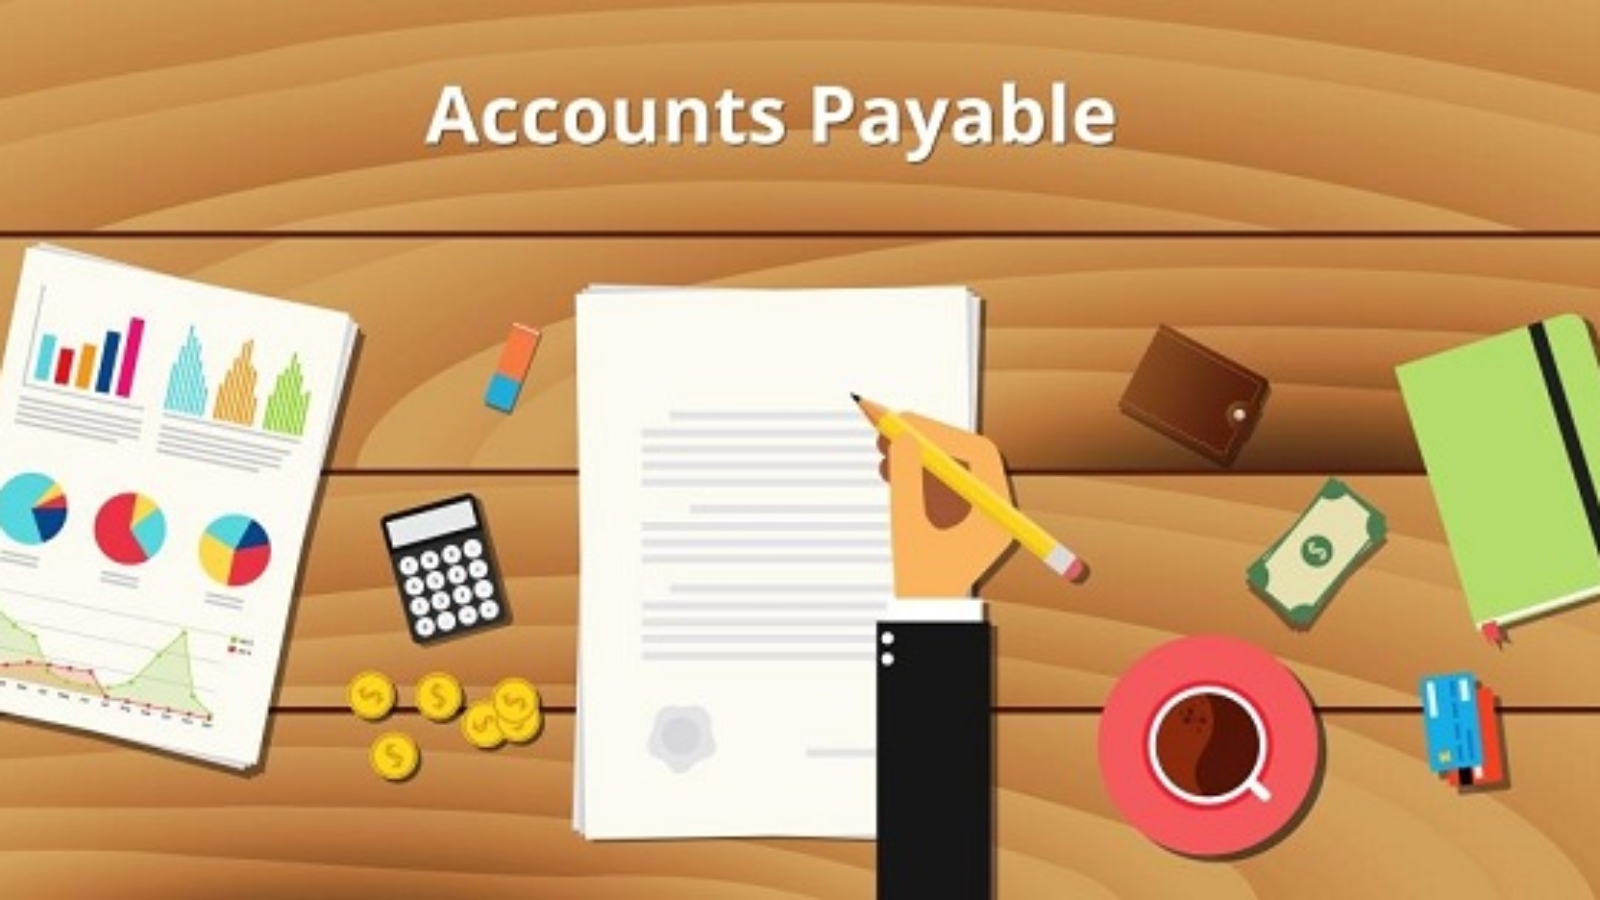 account payable